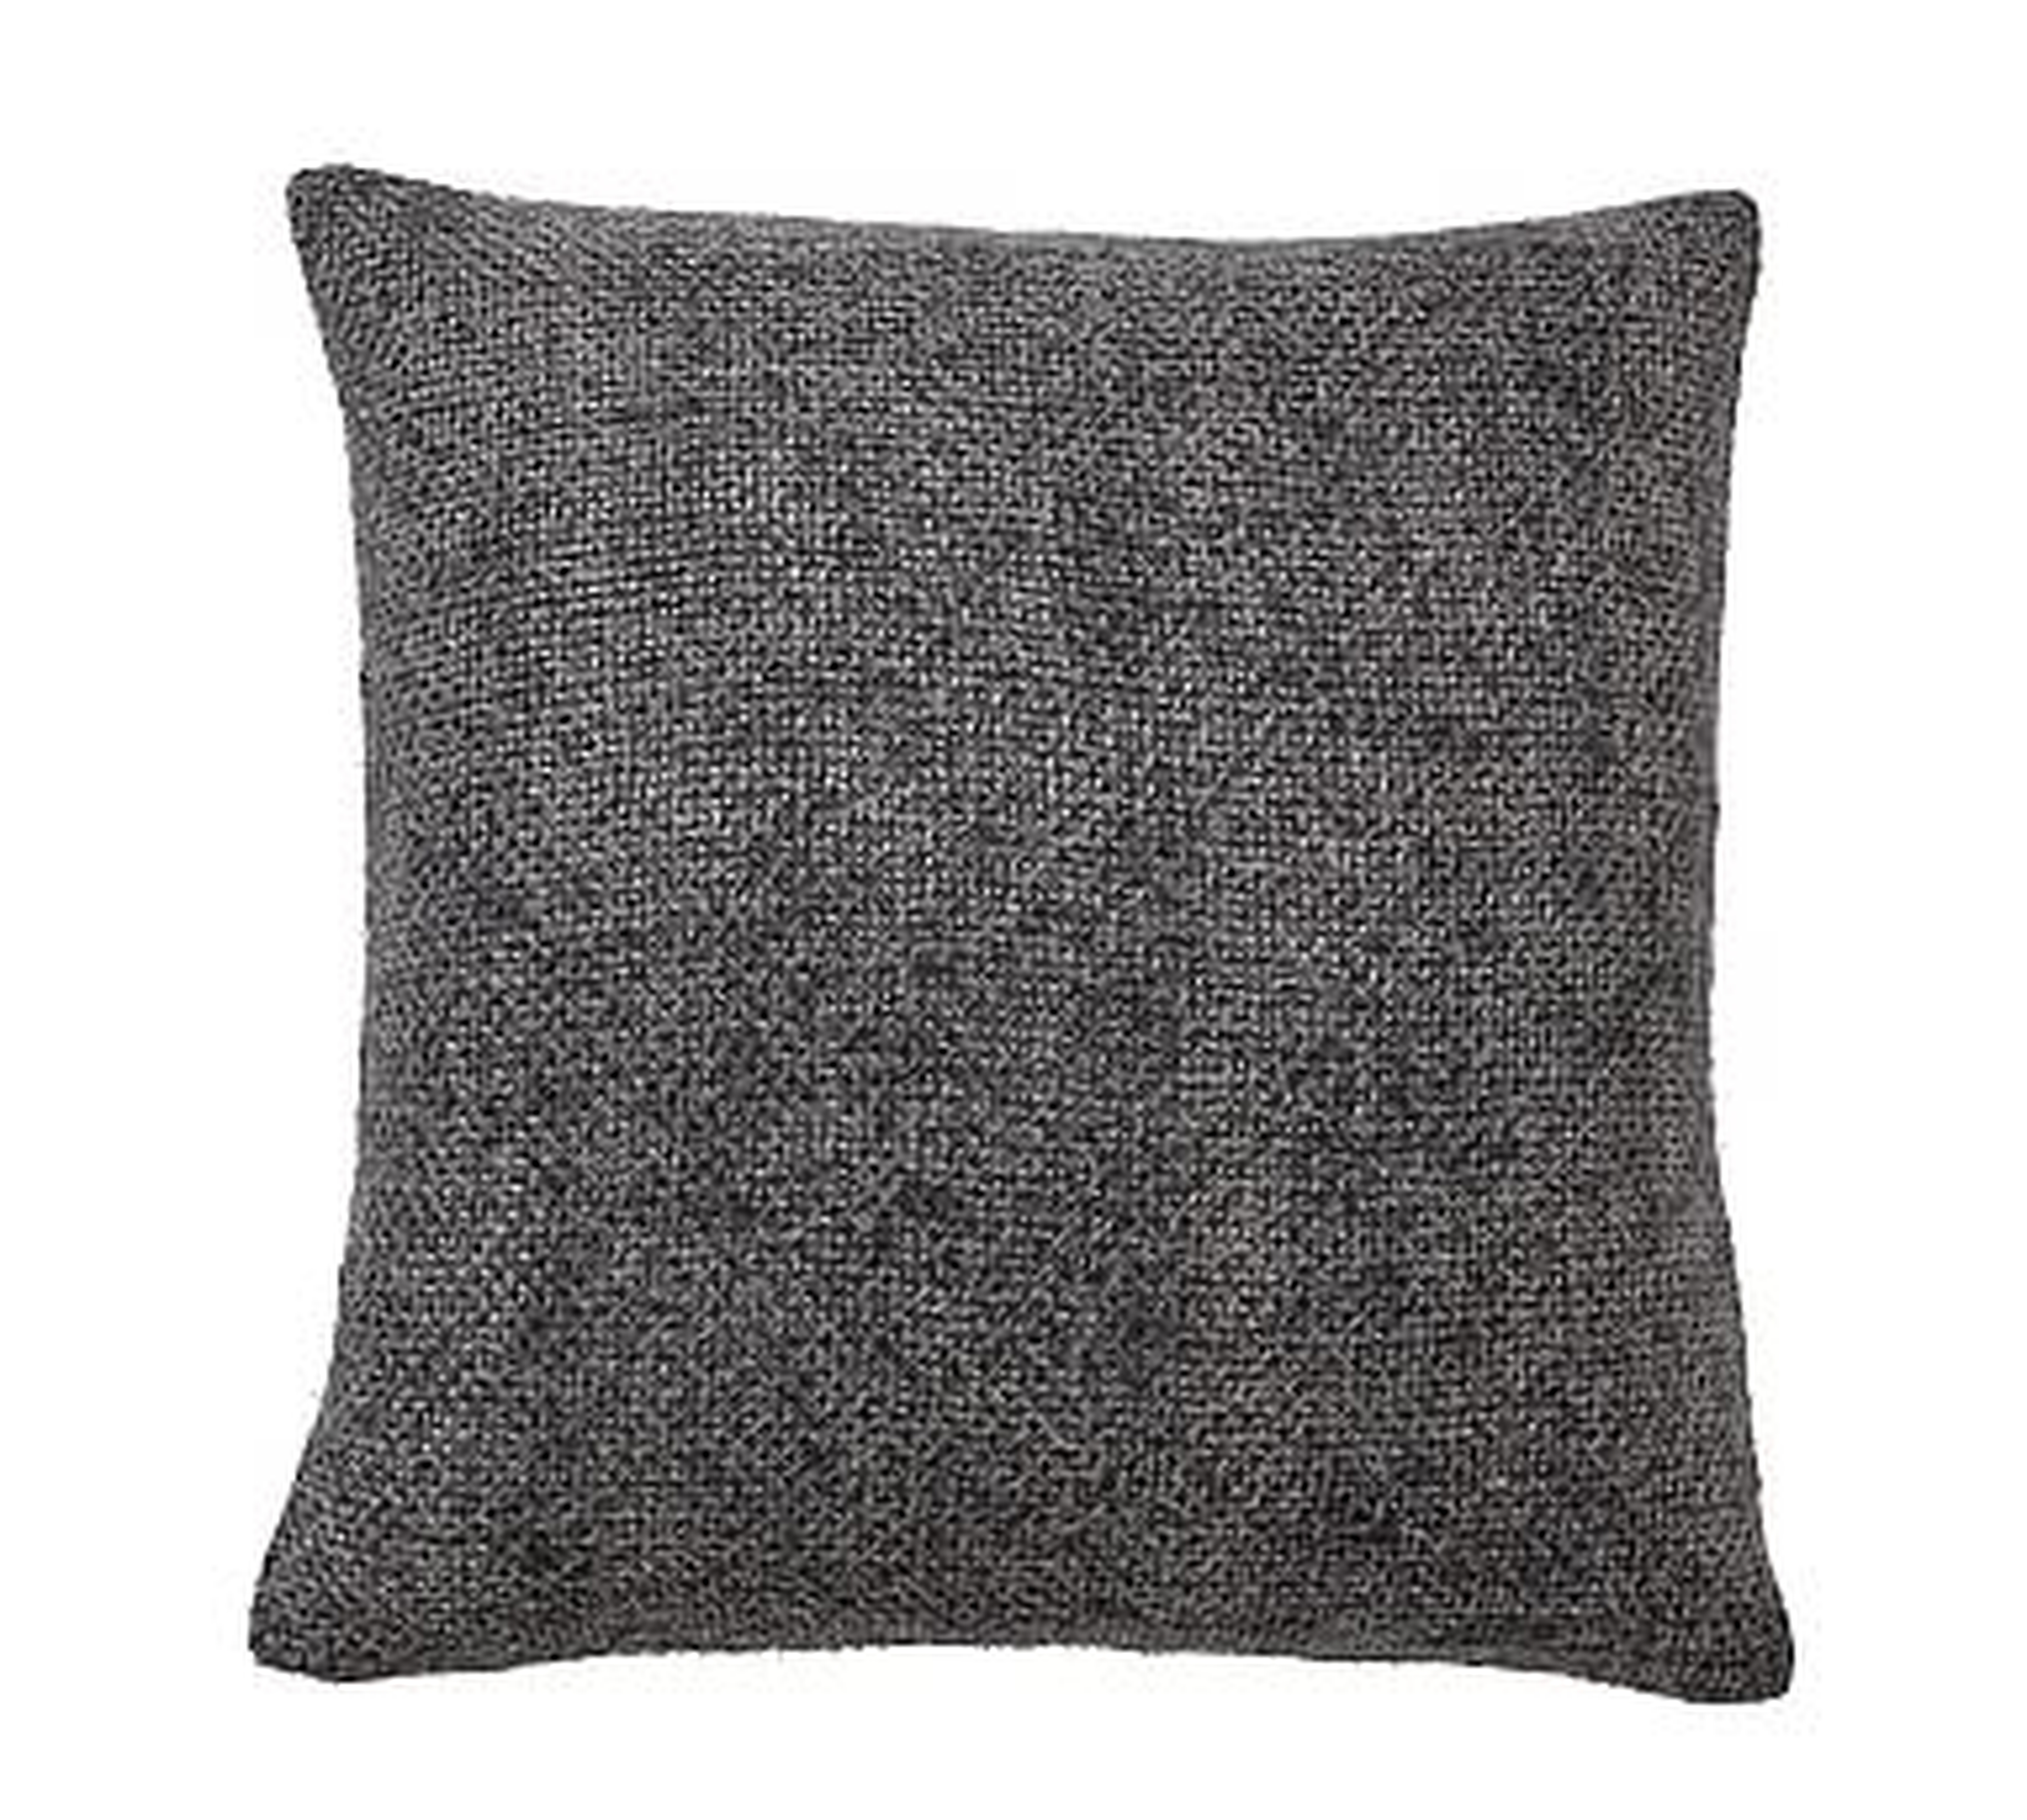 20" x 20", Faye Textured Linen Pillow with down alternative insert - Pottery Barn